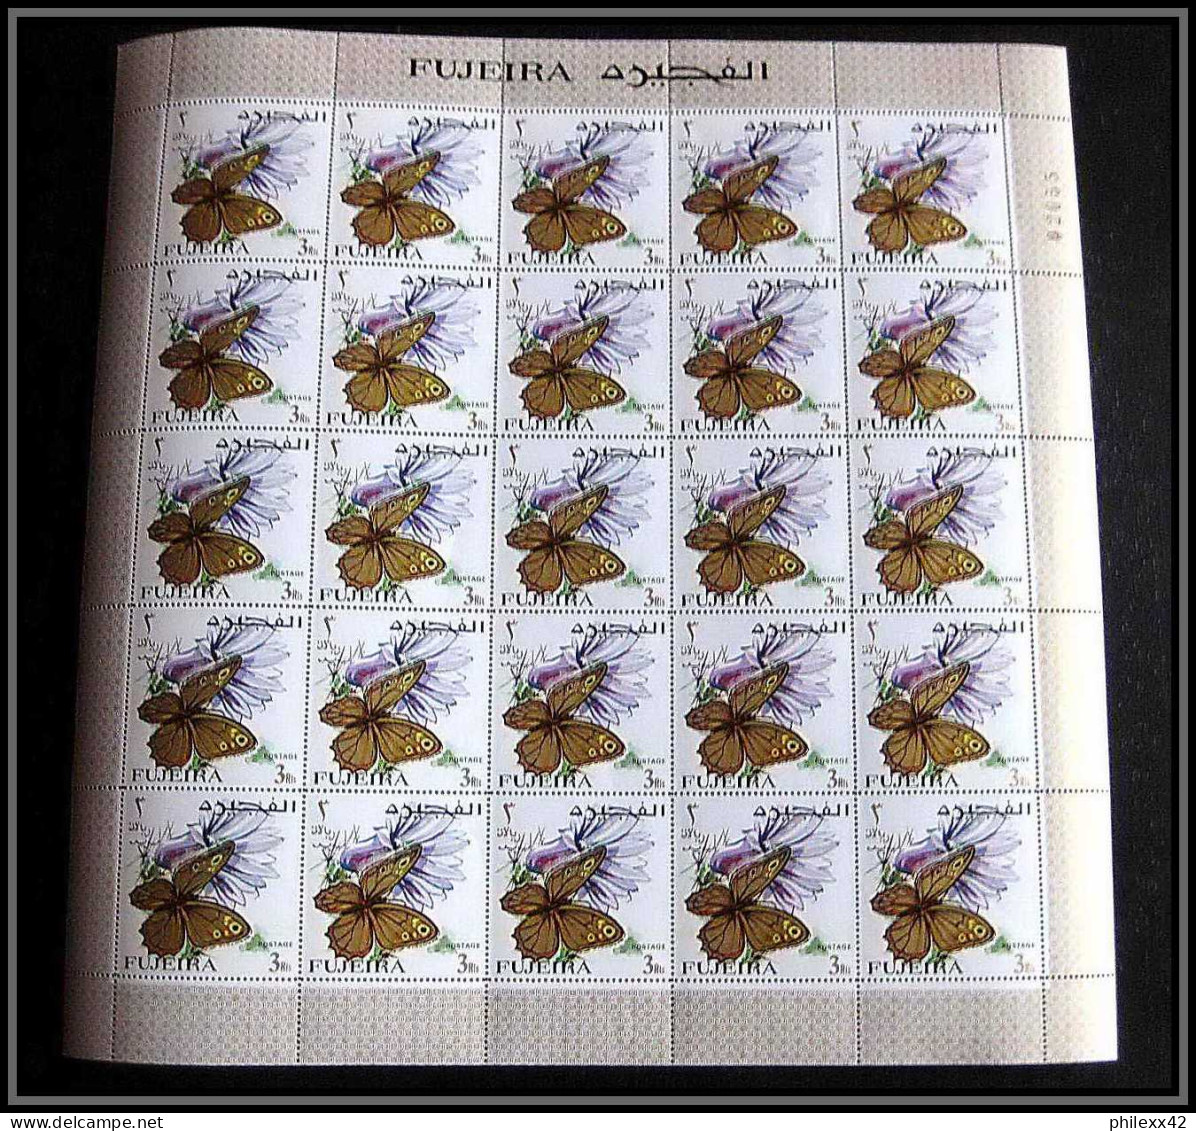 240b - Fujeira MNH ** Mi N° 159 / 185 A papillons (butterflies papillon) feuilles (sheets) rarissime cote 500 euros